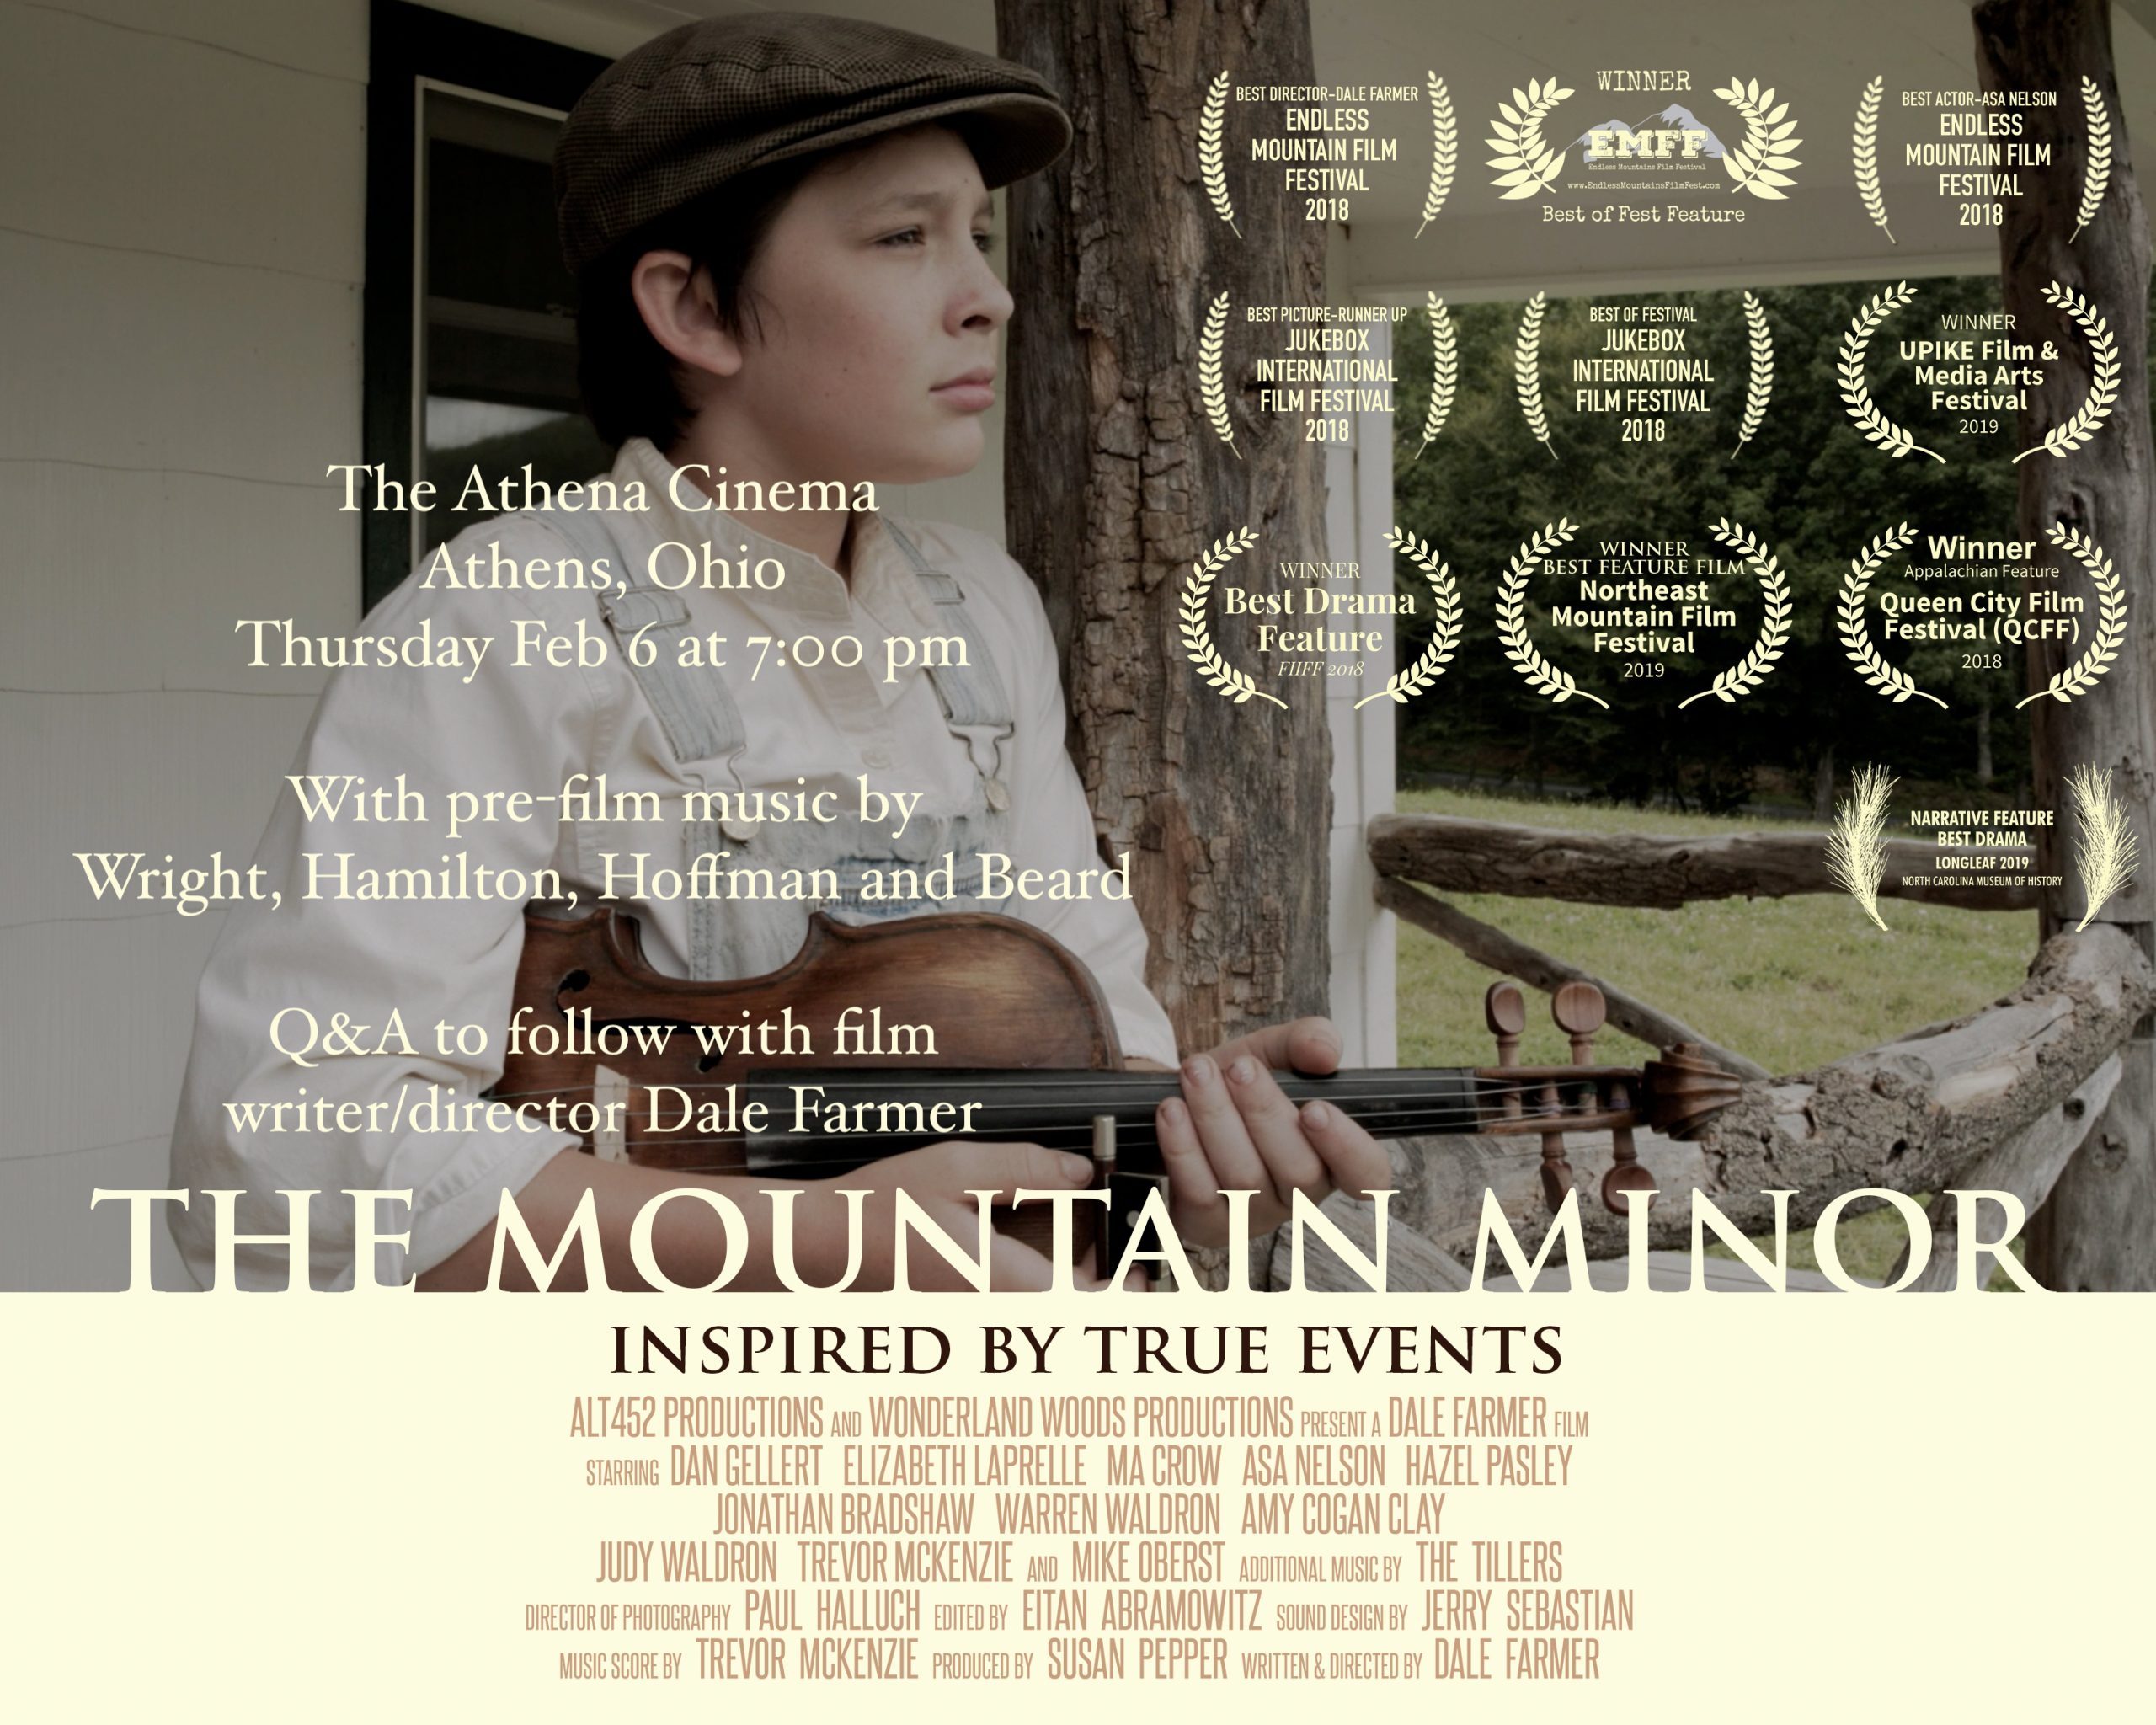 The Mountain Minor movie poster